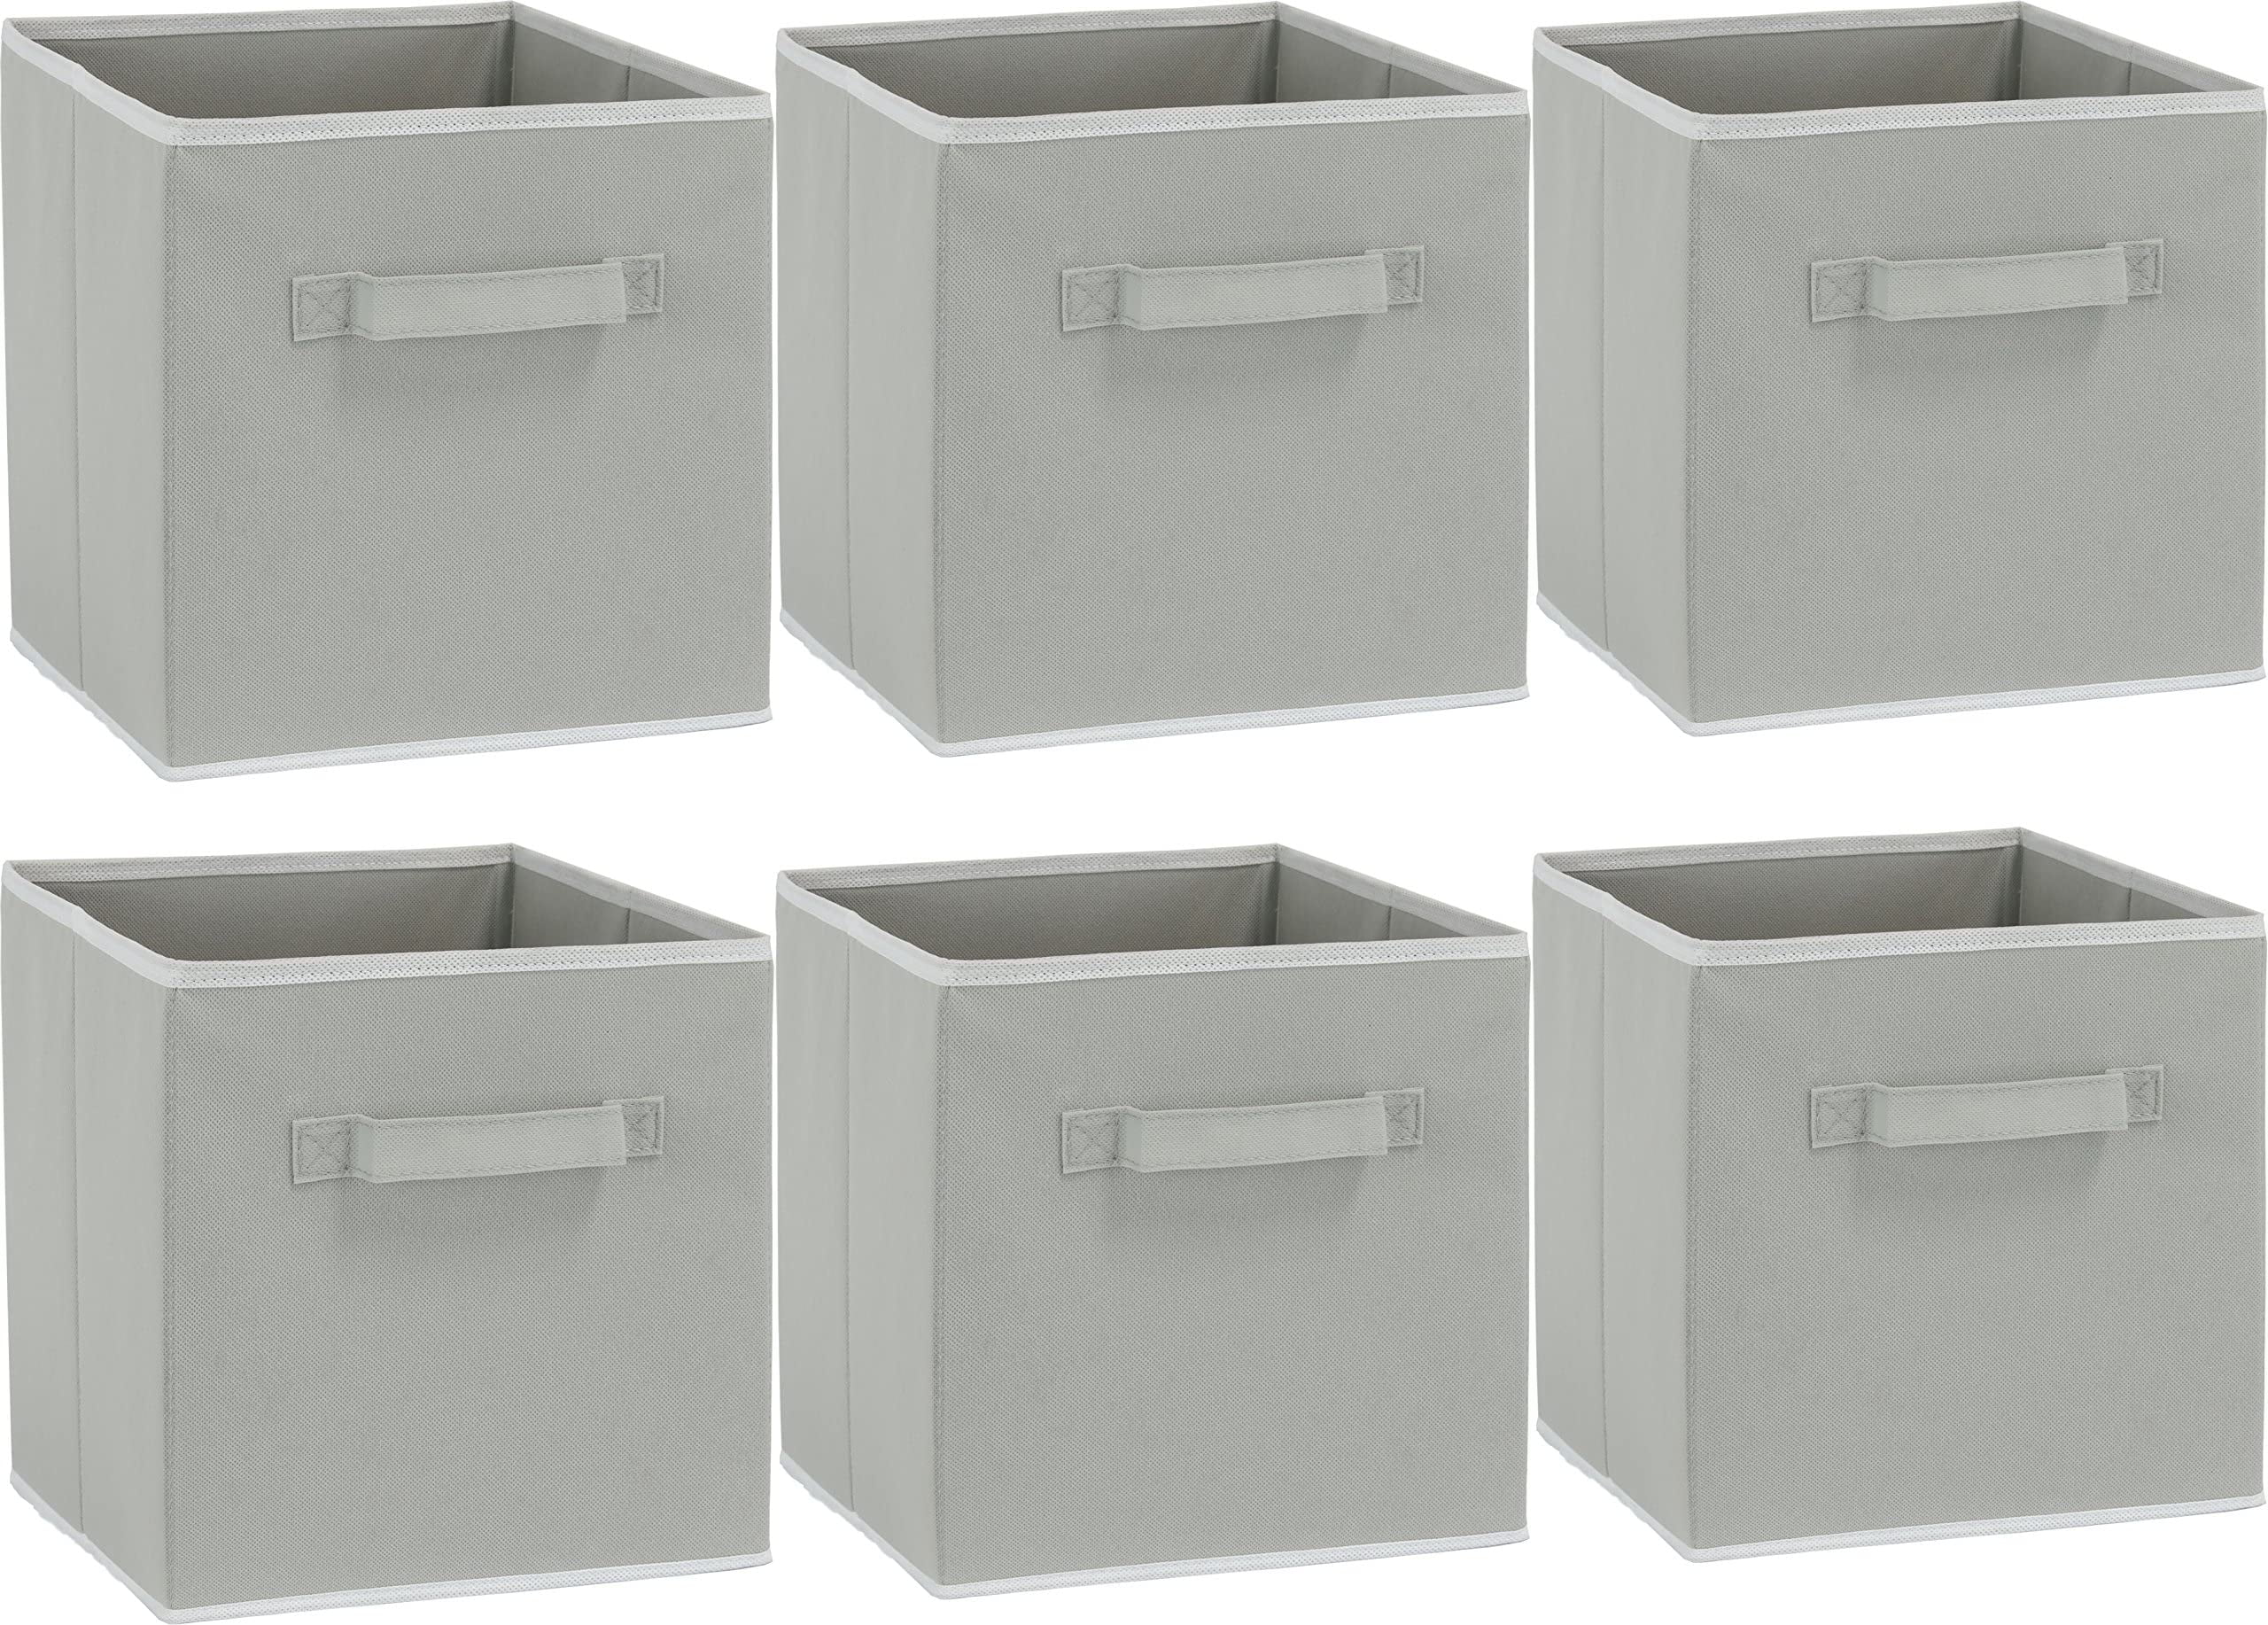 5 Five Simply Smart storage box set 6 pcs, cardboard, metal, gray